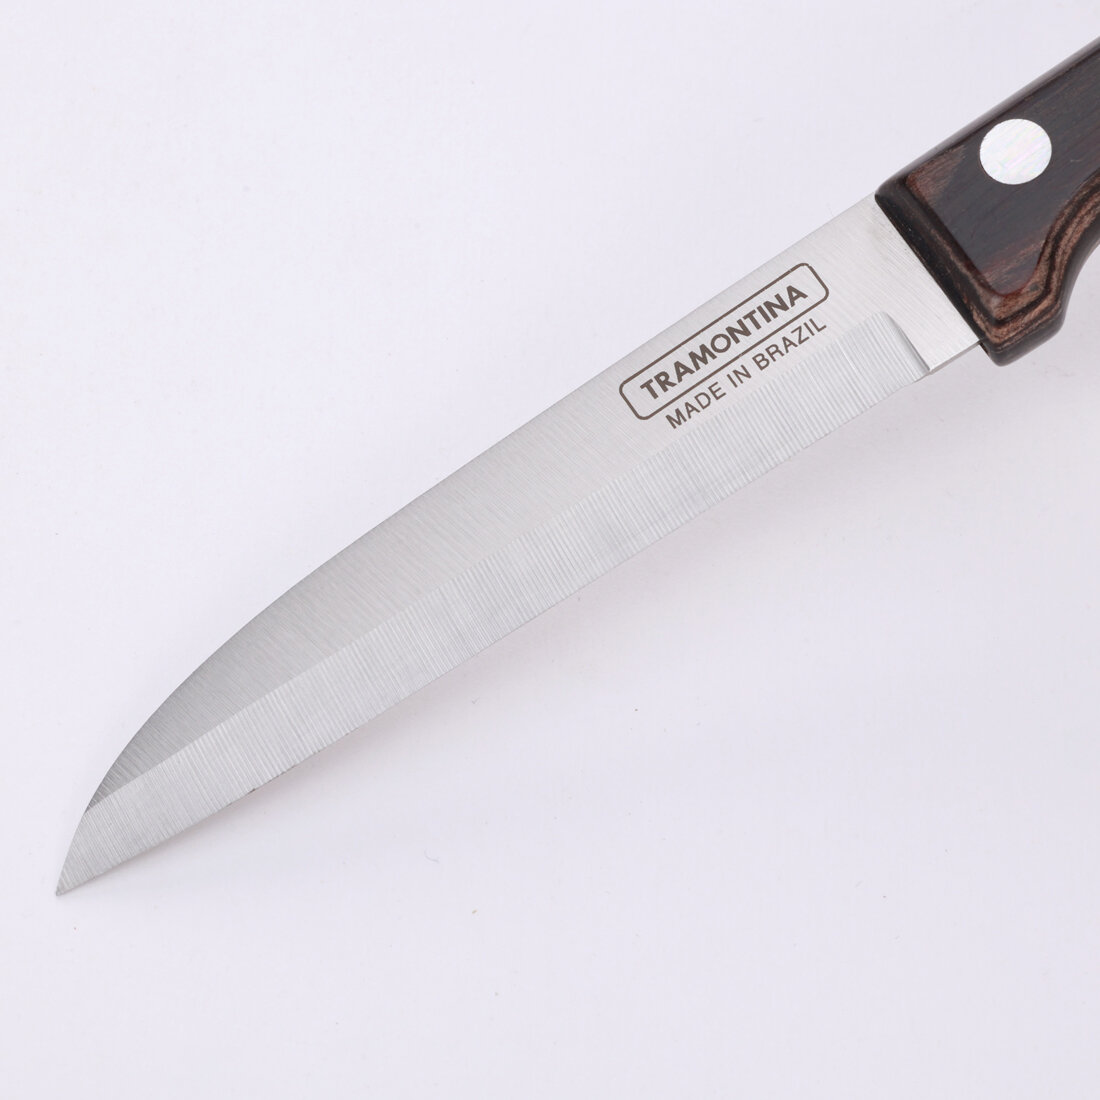 нож TRAMONTINA Polywood 7,5см для овощей нерж.сталь, дерево - фото №6